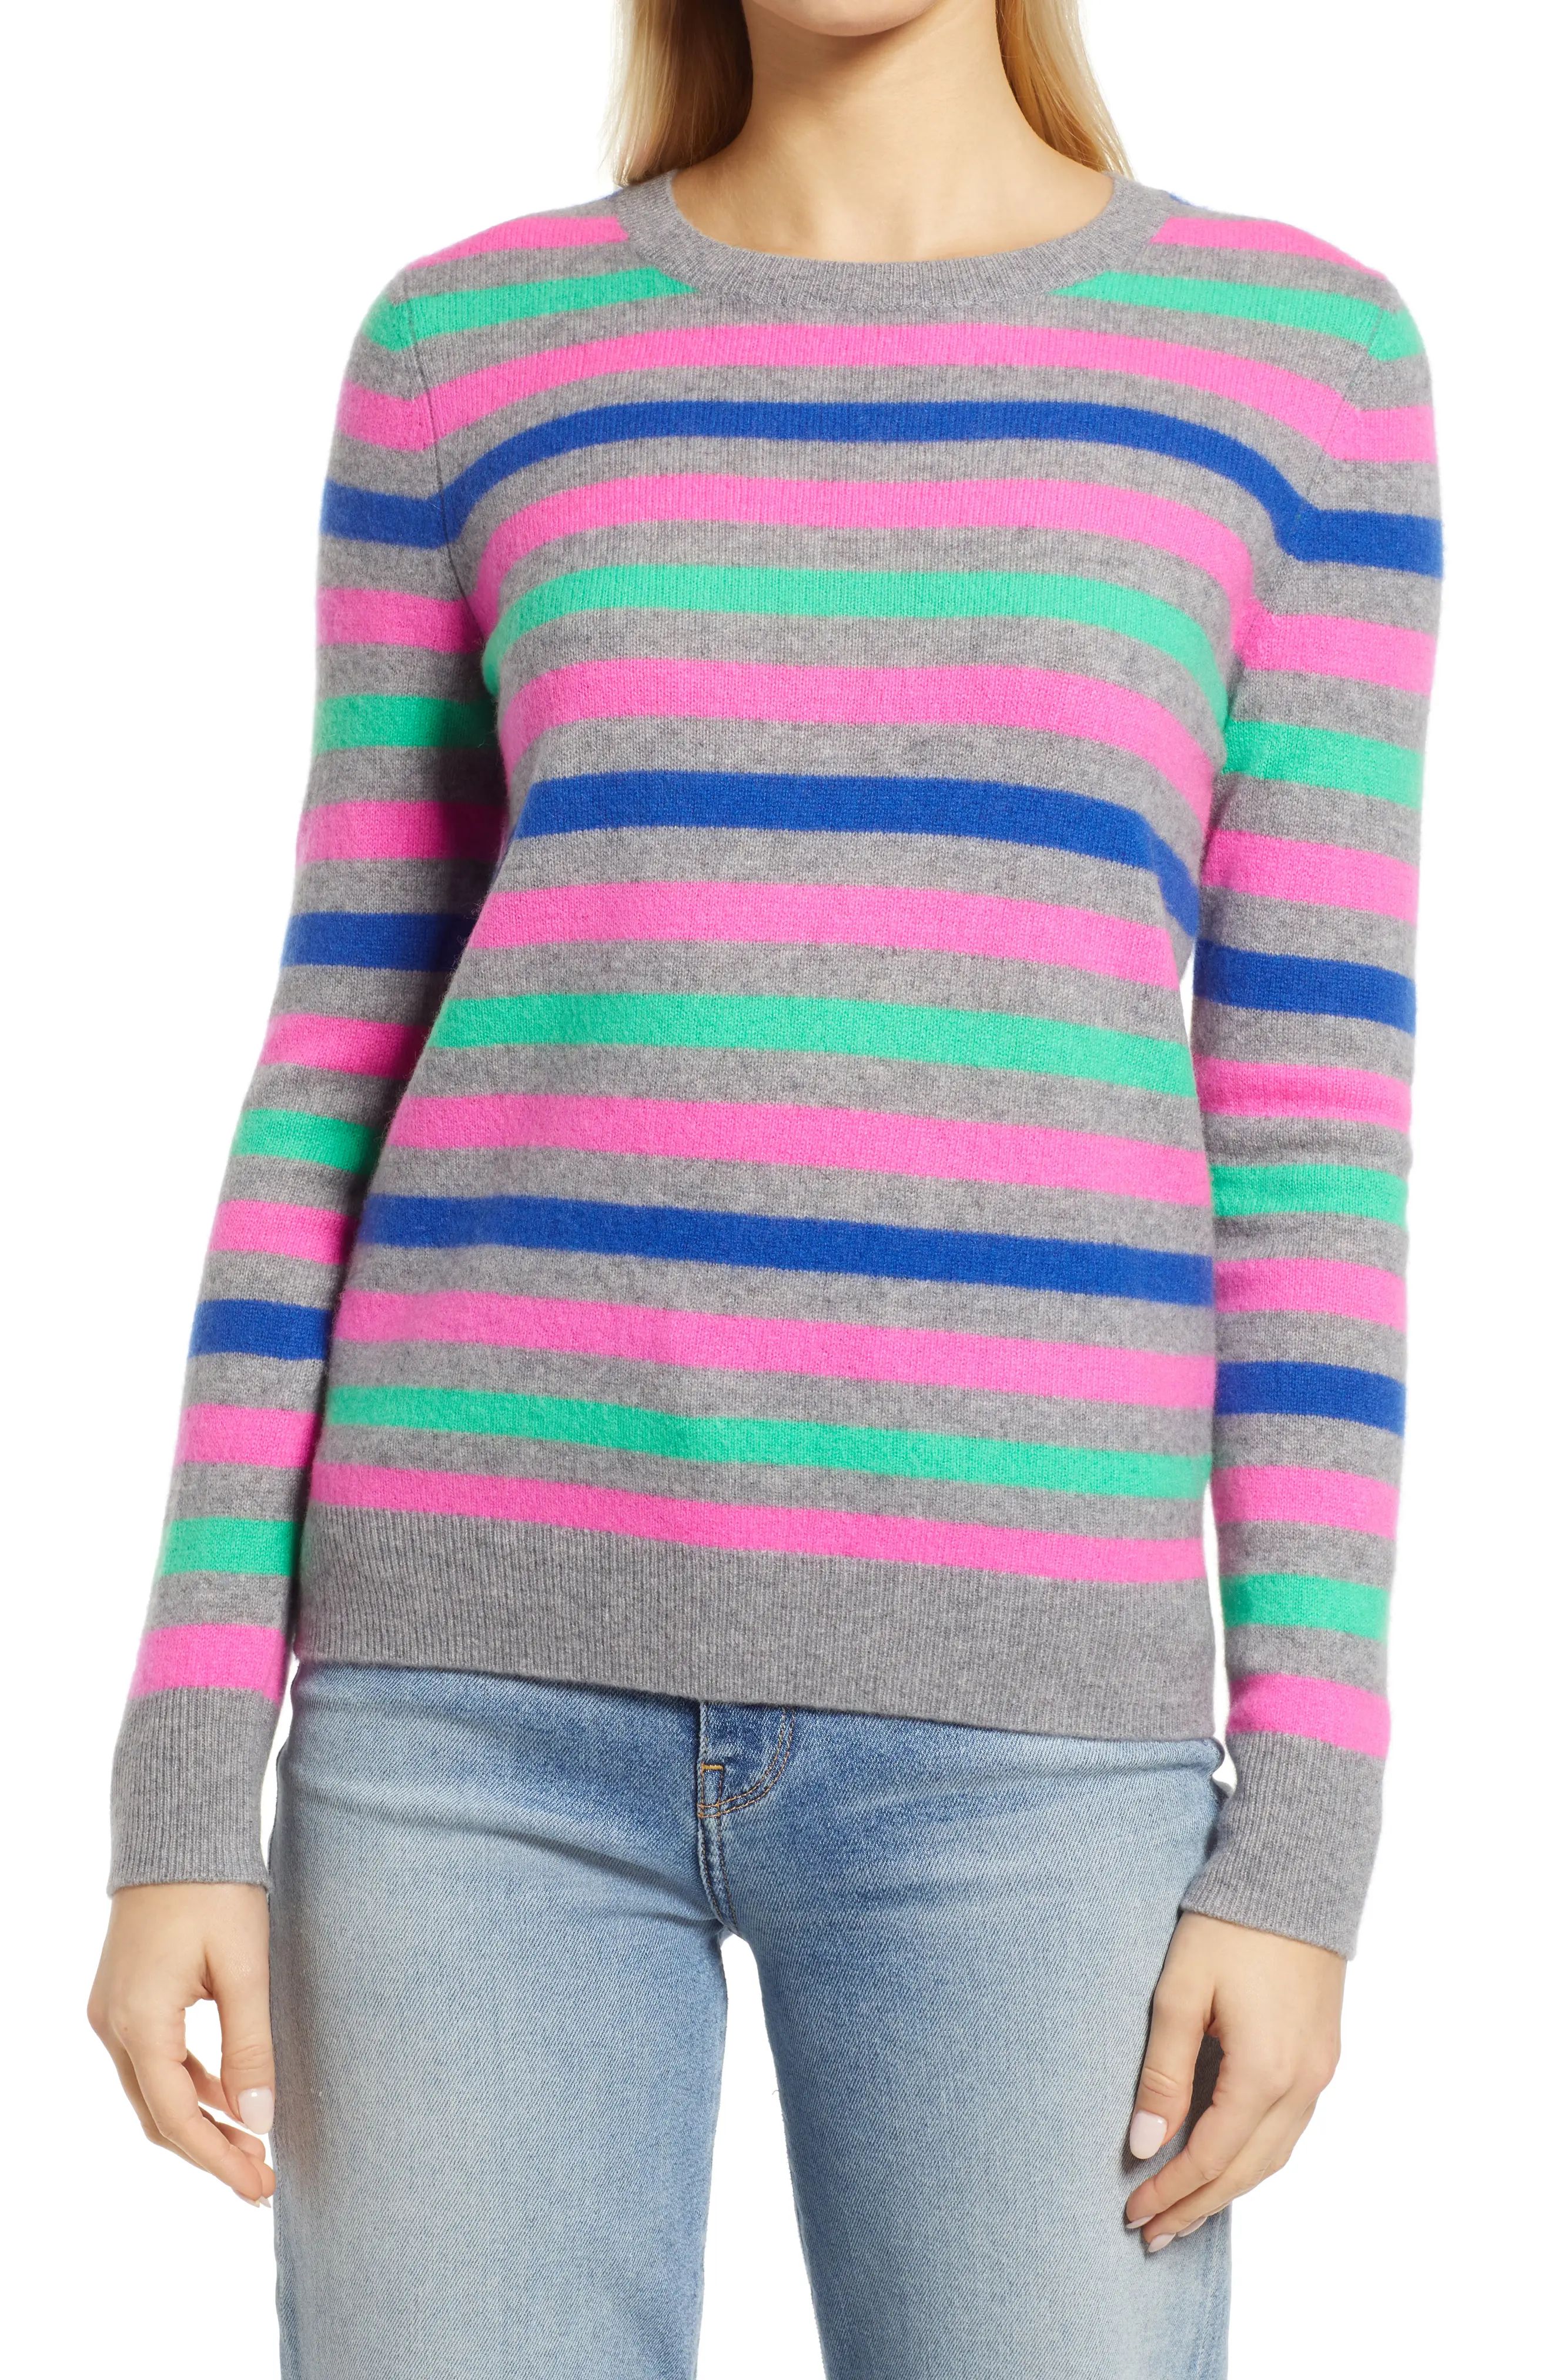 Nordstrom Stripe Cashmere Sweater, Size Xx-Large in Grey Multi Stripe at Nordstrom | Nordstrom